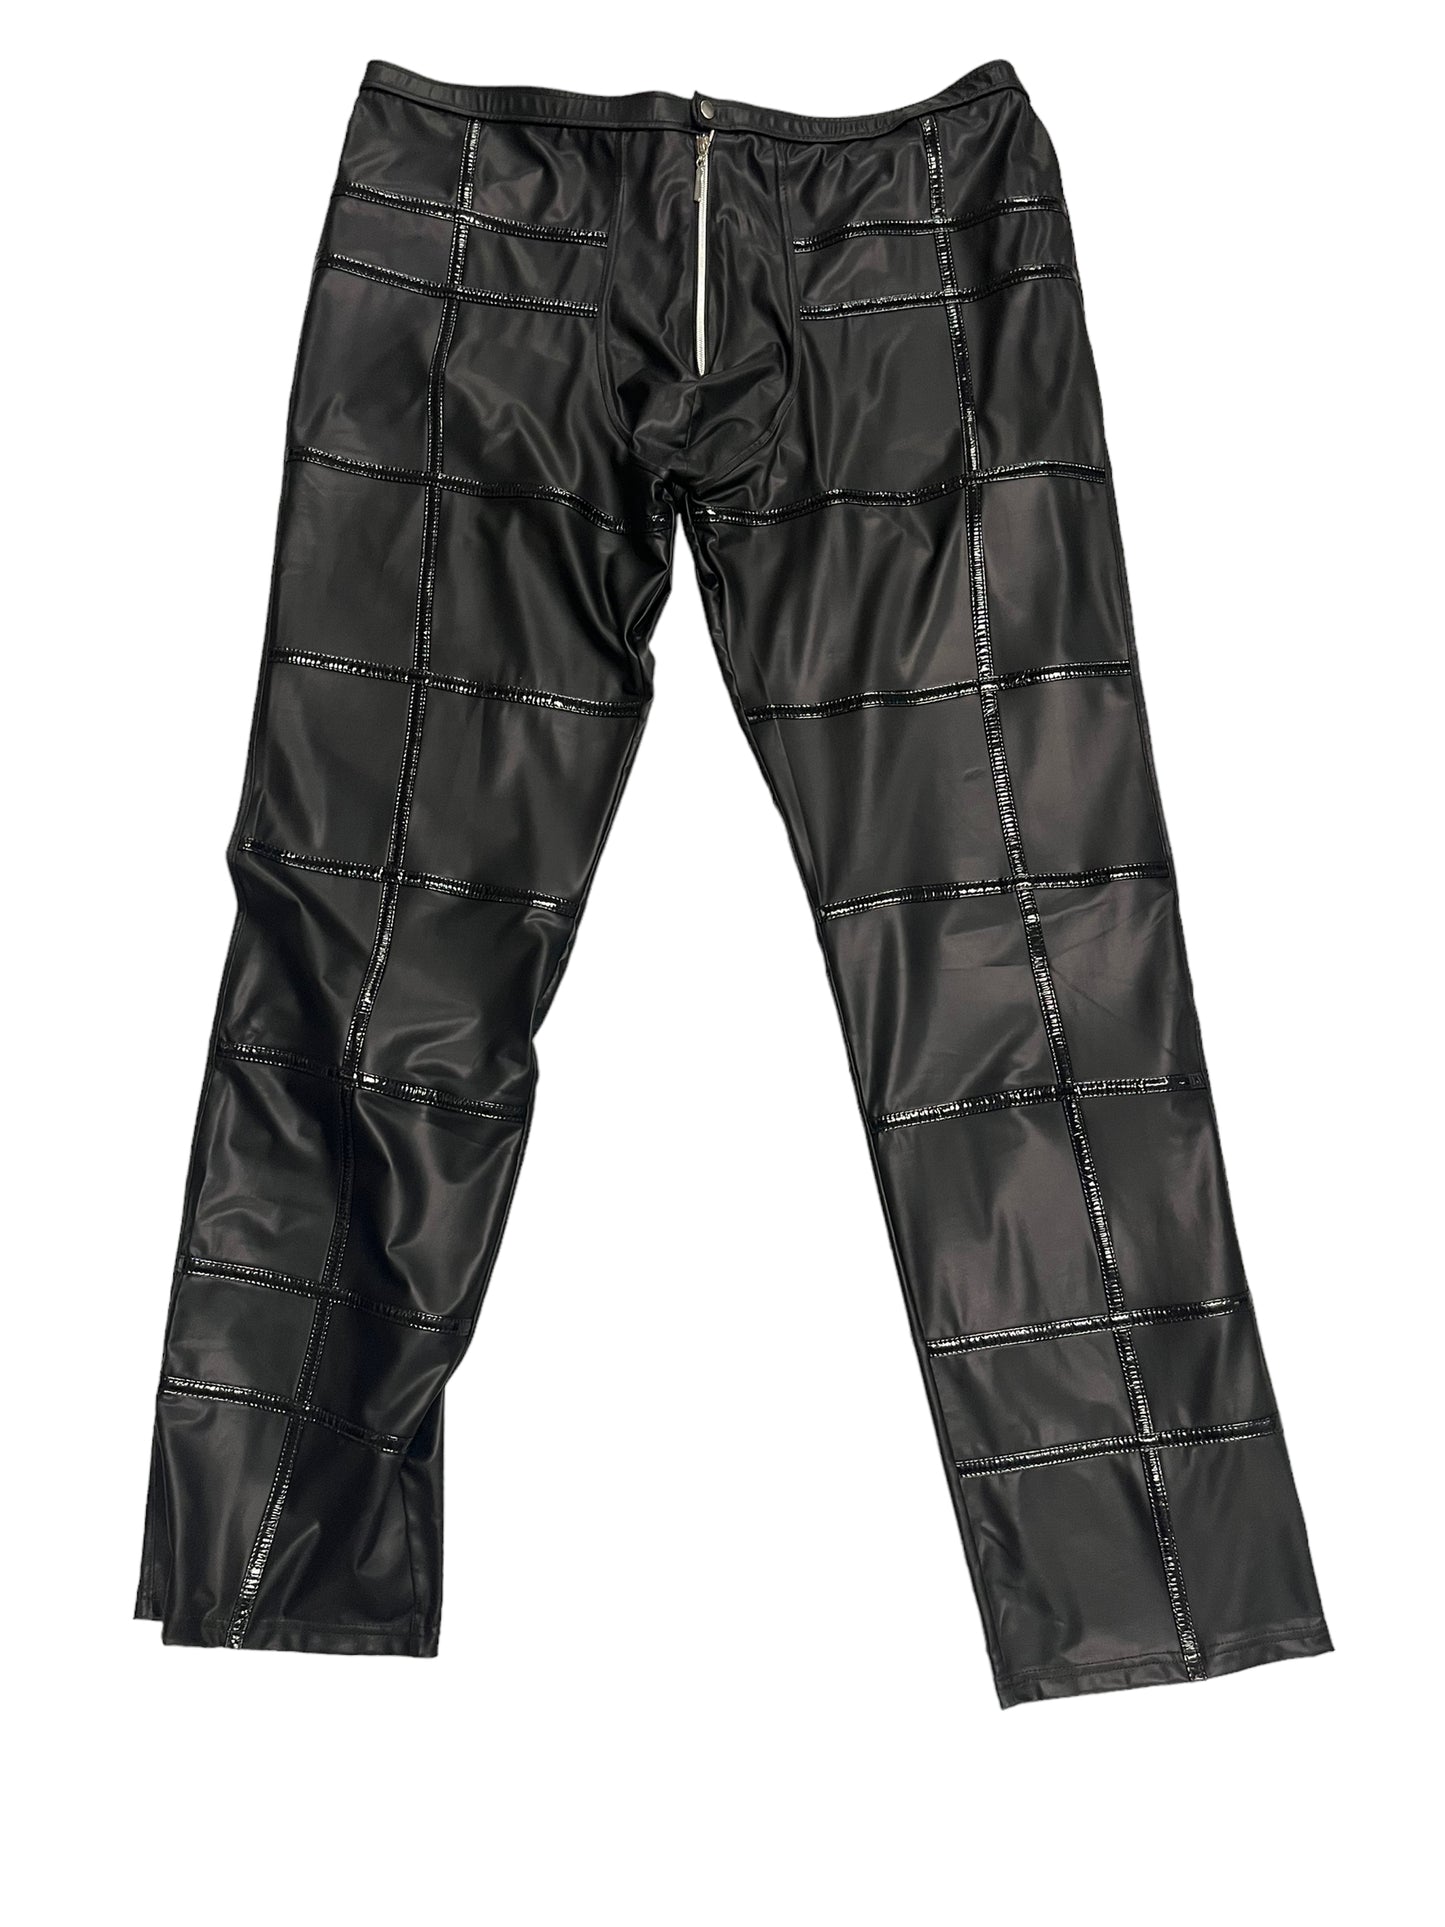 Noir - LL106 - Black Long Pants With Black Stripes - Size 4XL